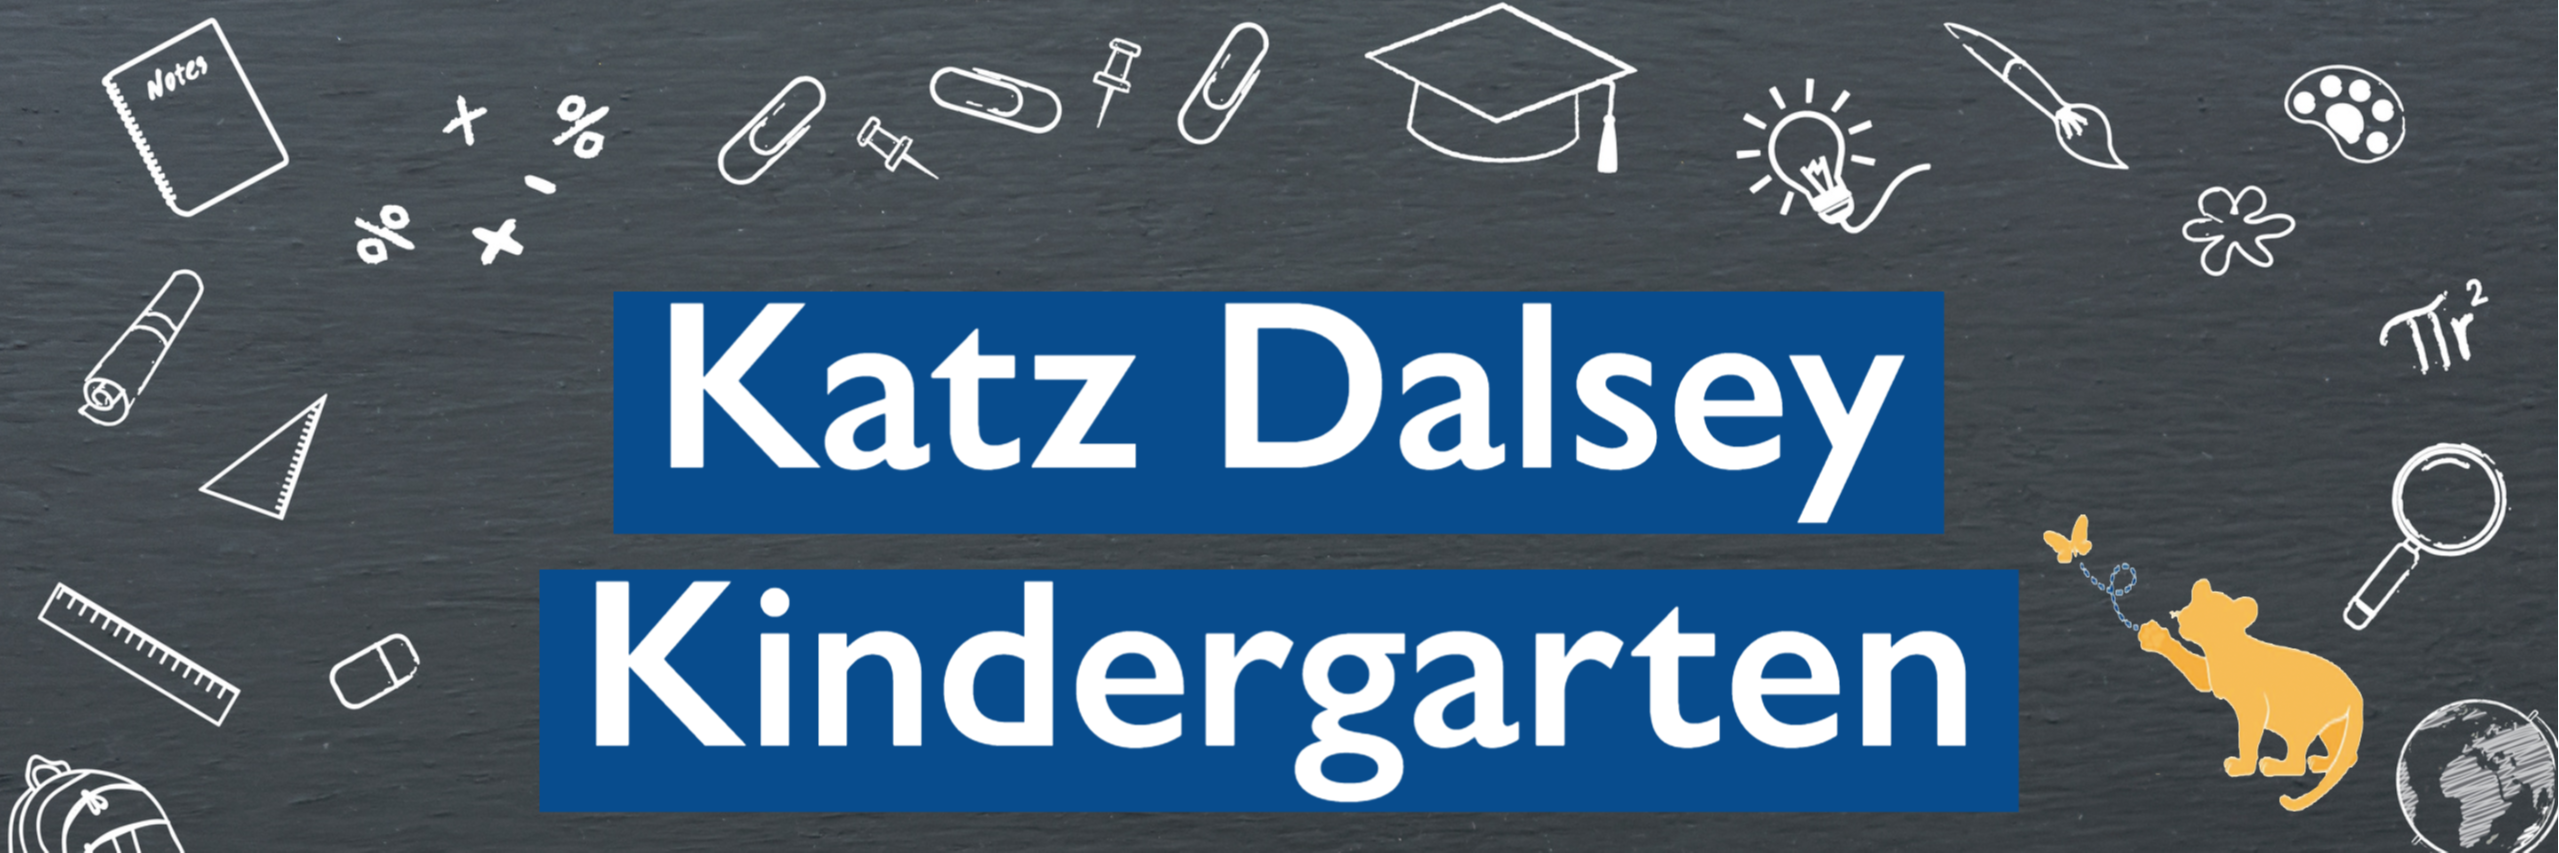 KATZ Dalsey Kindergarten